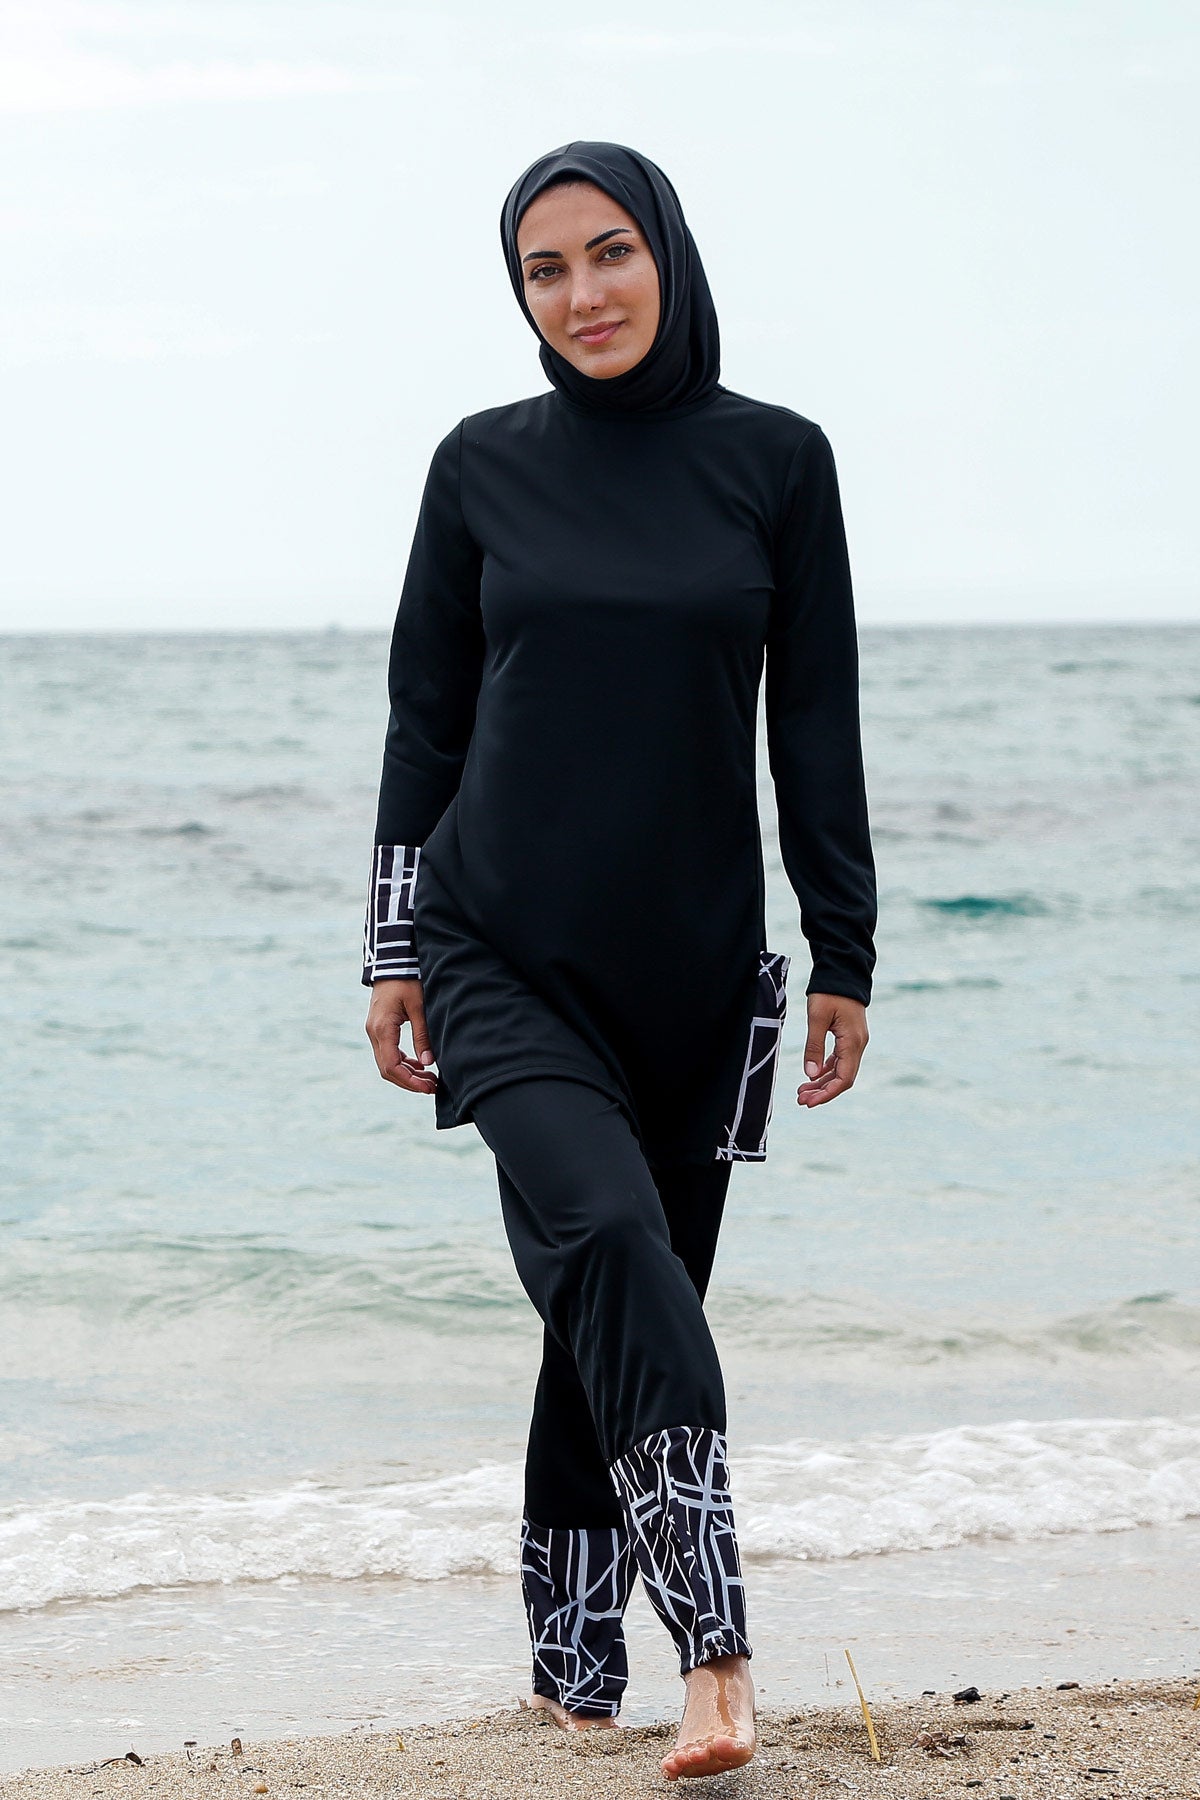 Marina Modest Swimsuit R1114 - Rivamera Black and White